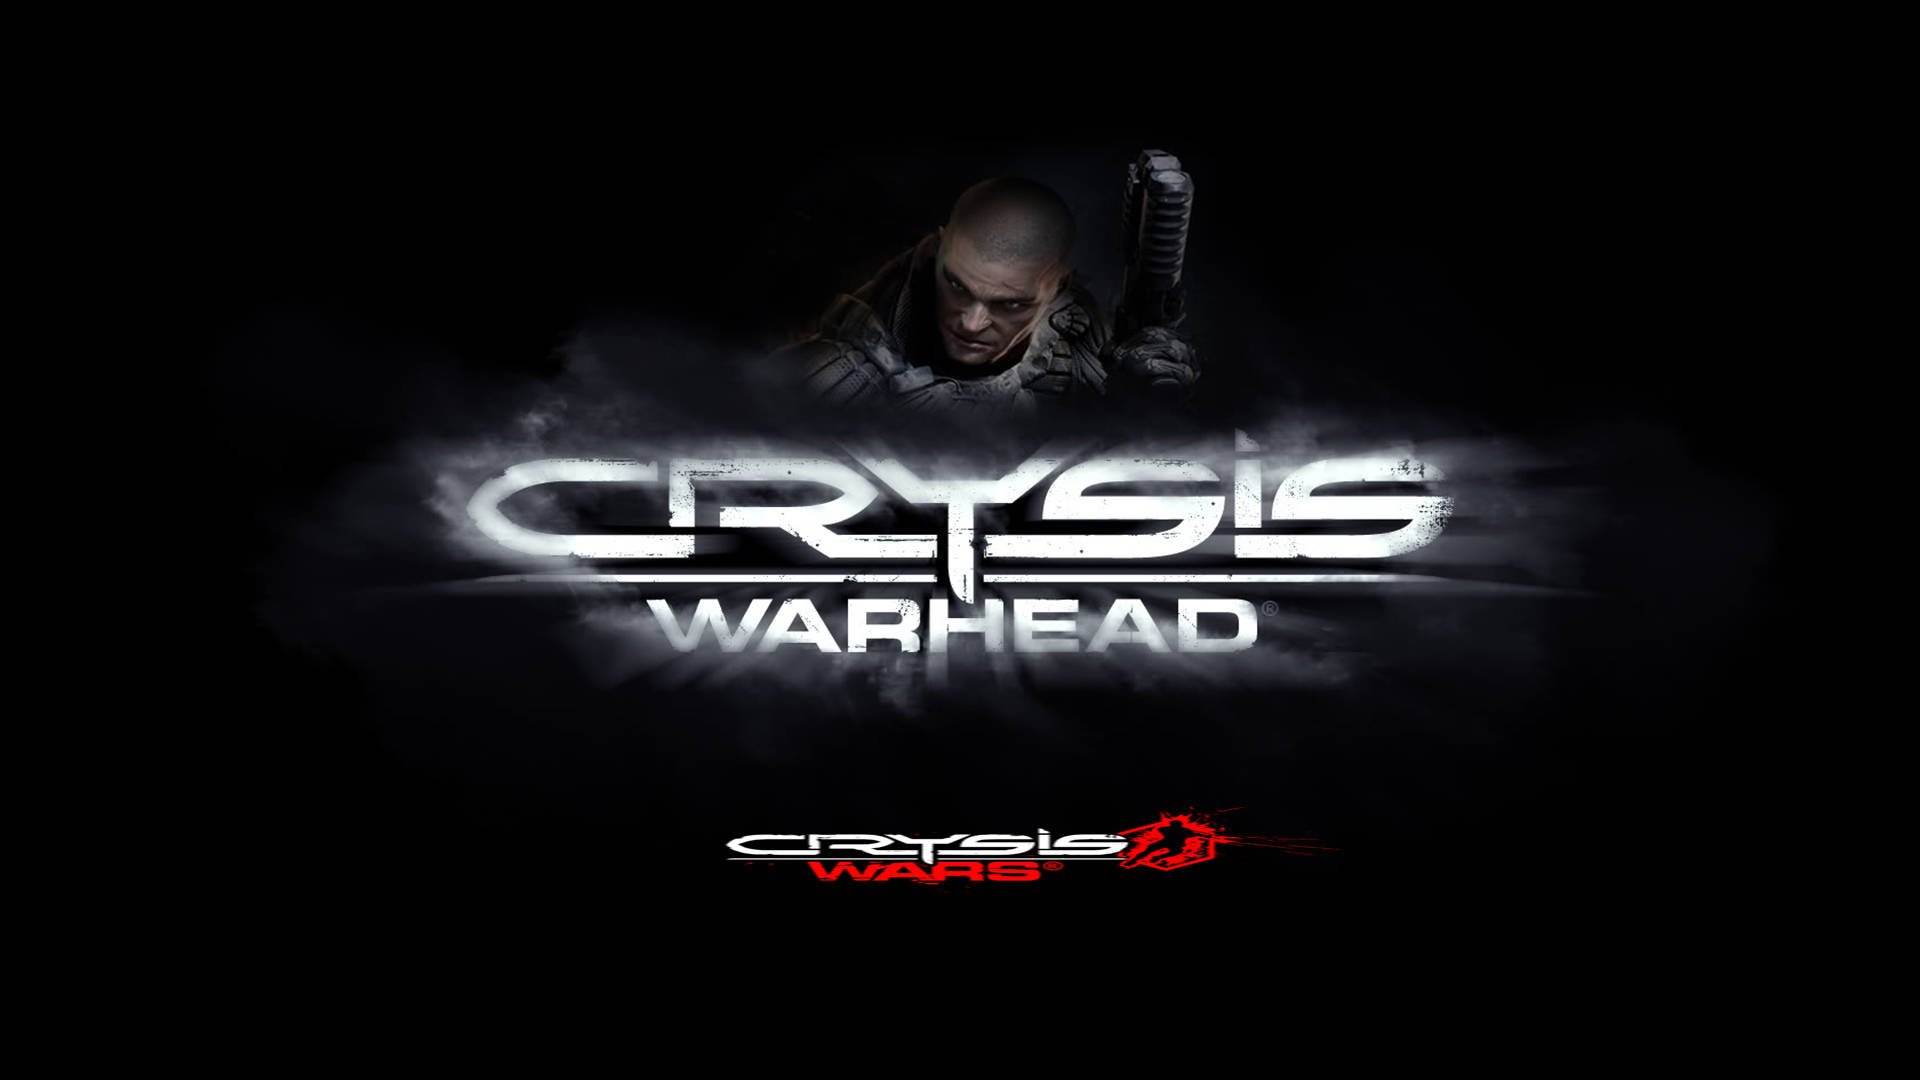 Crysiswarhead Spiel Titel Poster Wallpaper